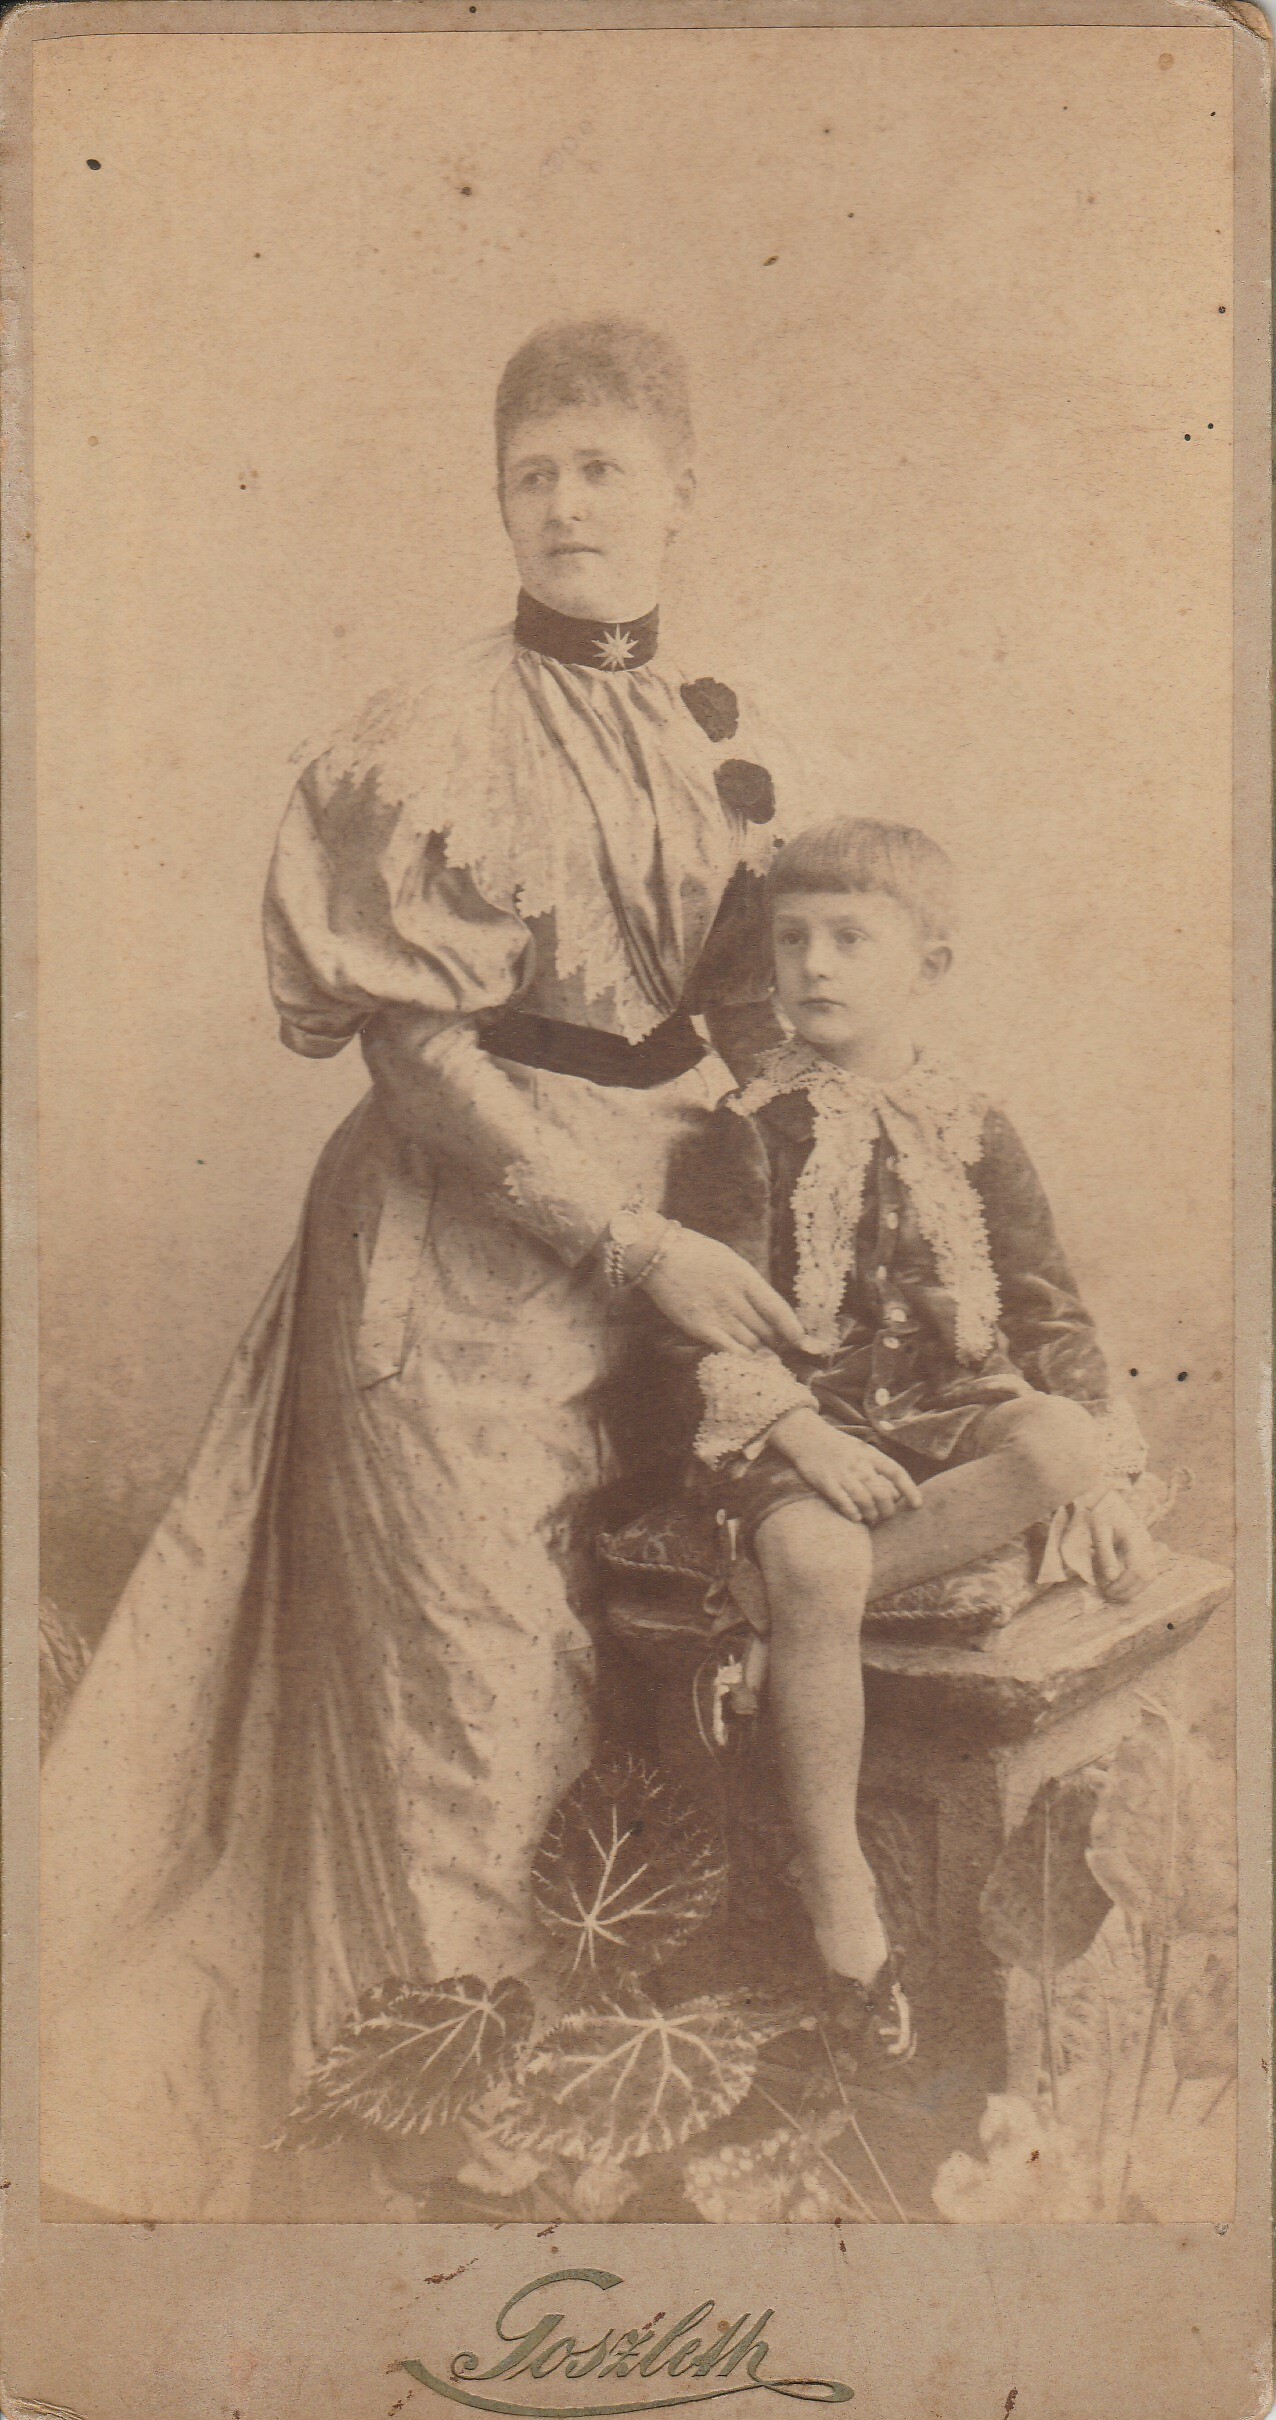 Nő és gyermeke 19. sz. végi fotón (Tapolcai Városi Múzeum CC BY-NC-SA)